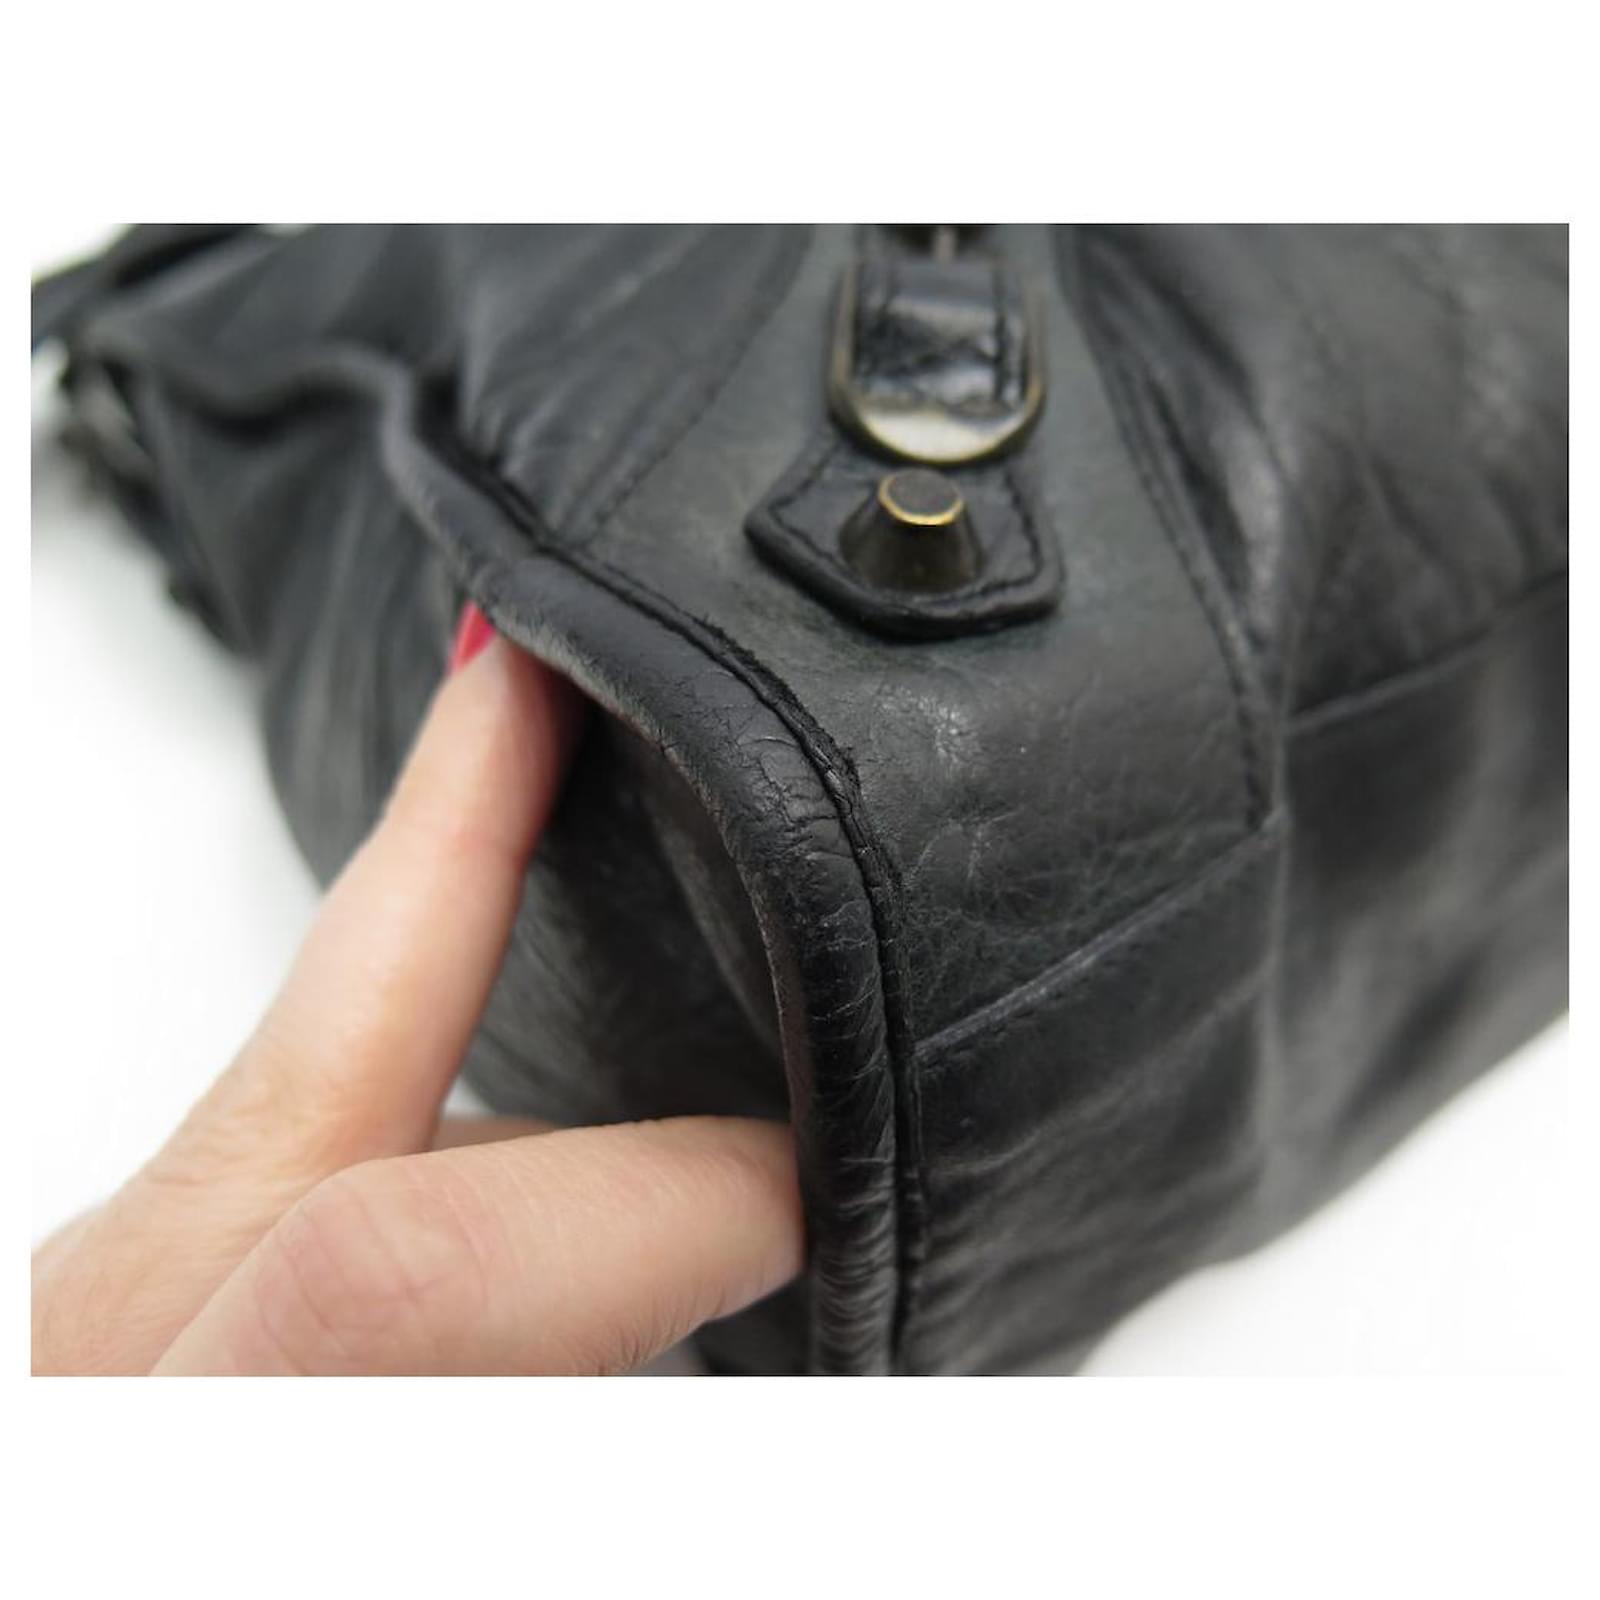 Balenciaga Classic City Handbag 115748 BLACK LEATHER HAND BAG ref